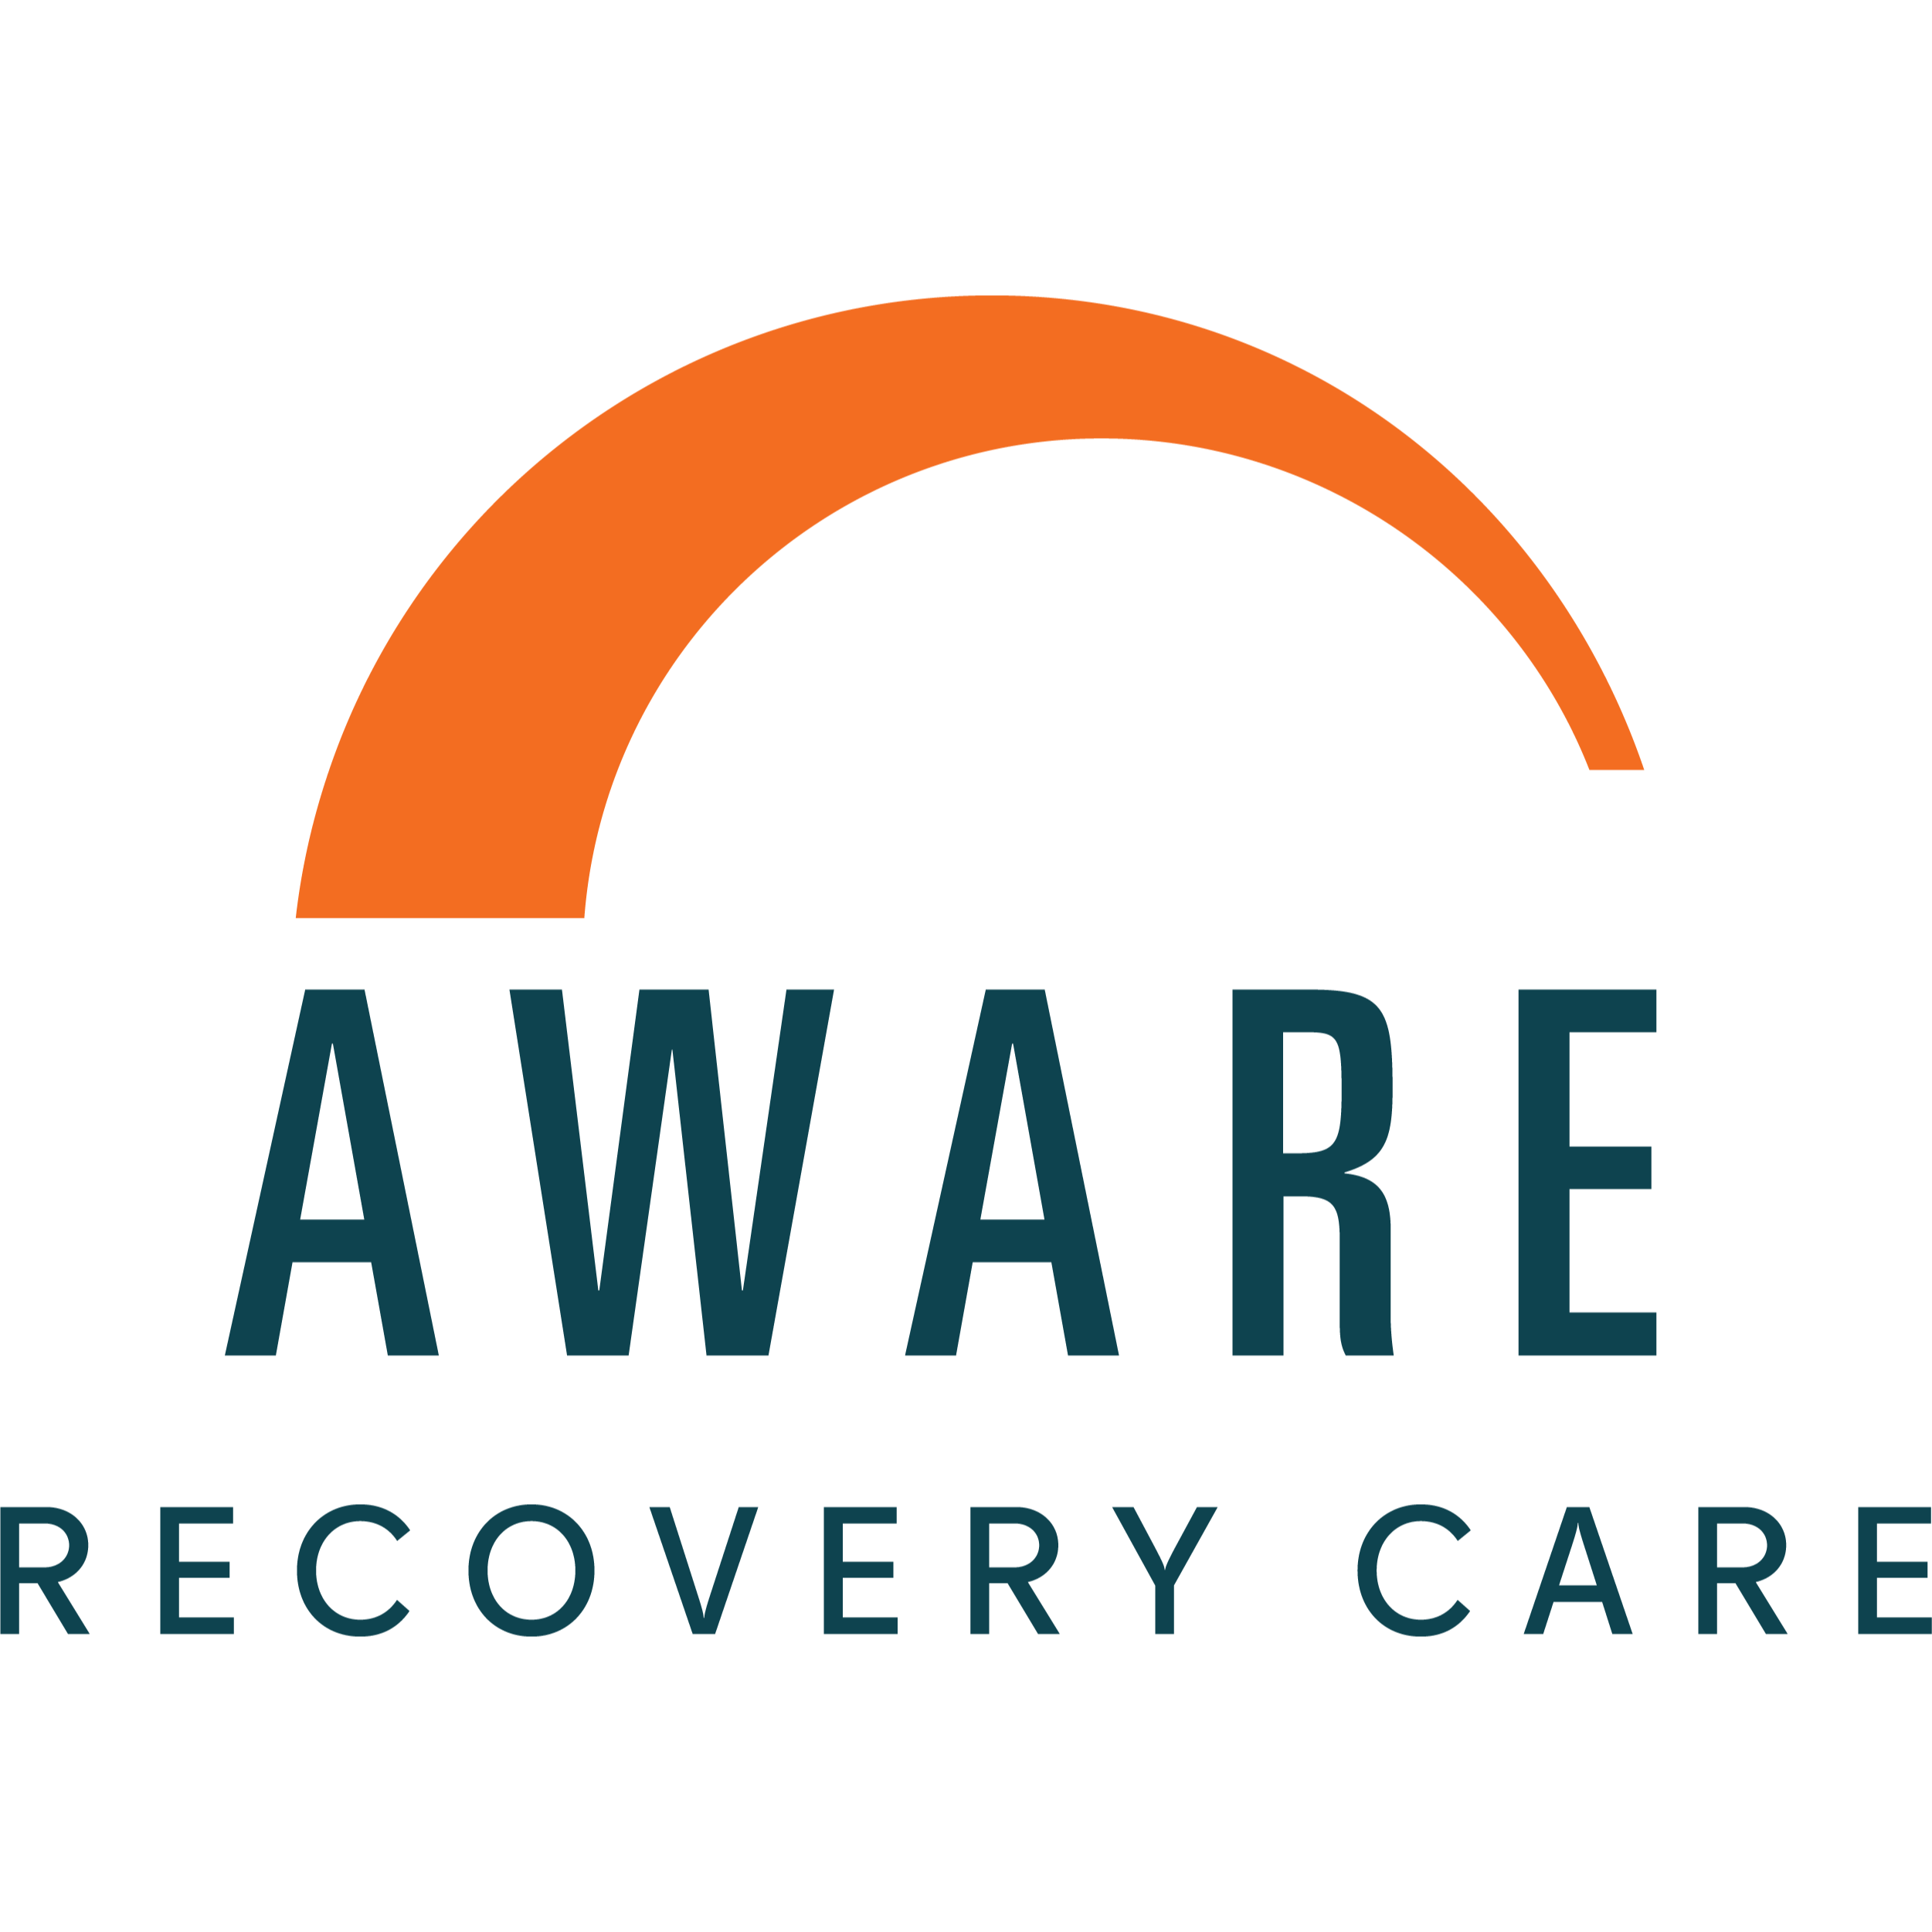 Aware Recovery Care - Delray Beach, FL 33445 - (561)418-3262 | ShowMeLocal.com